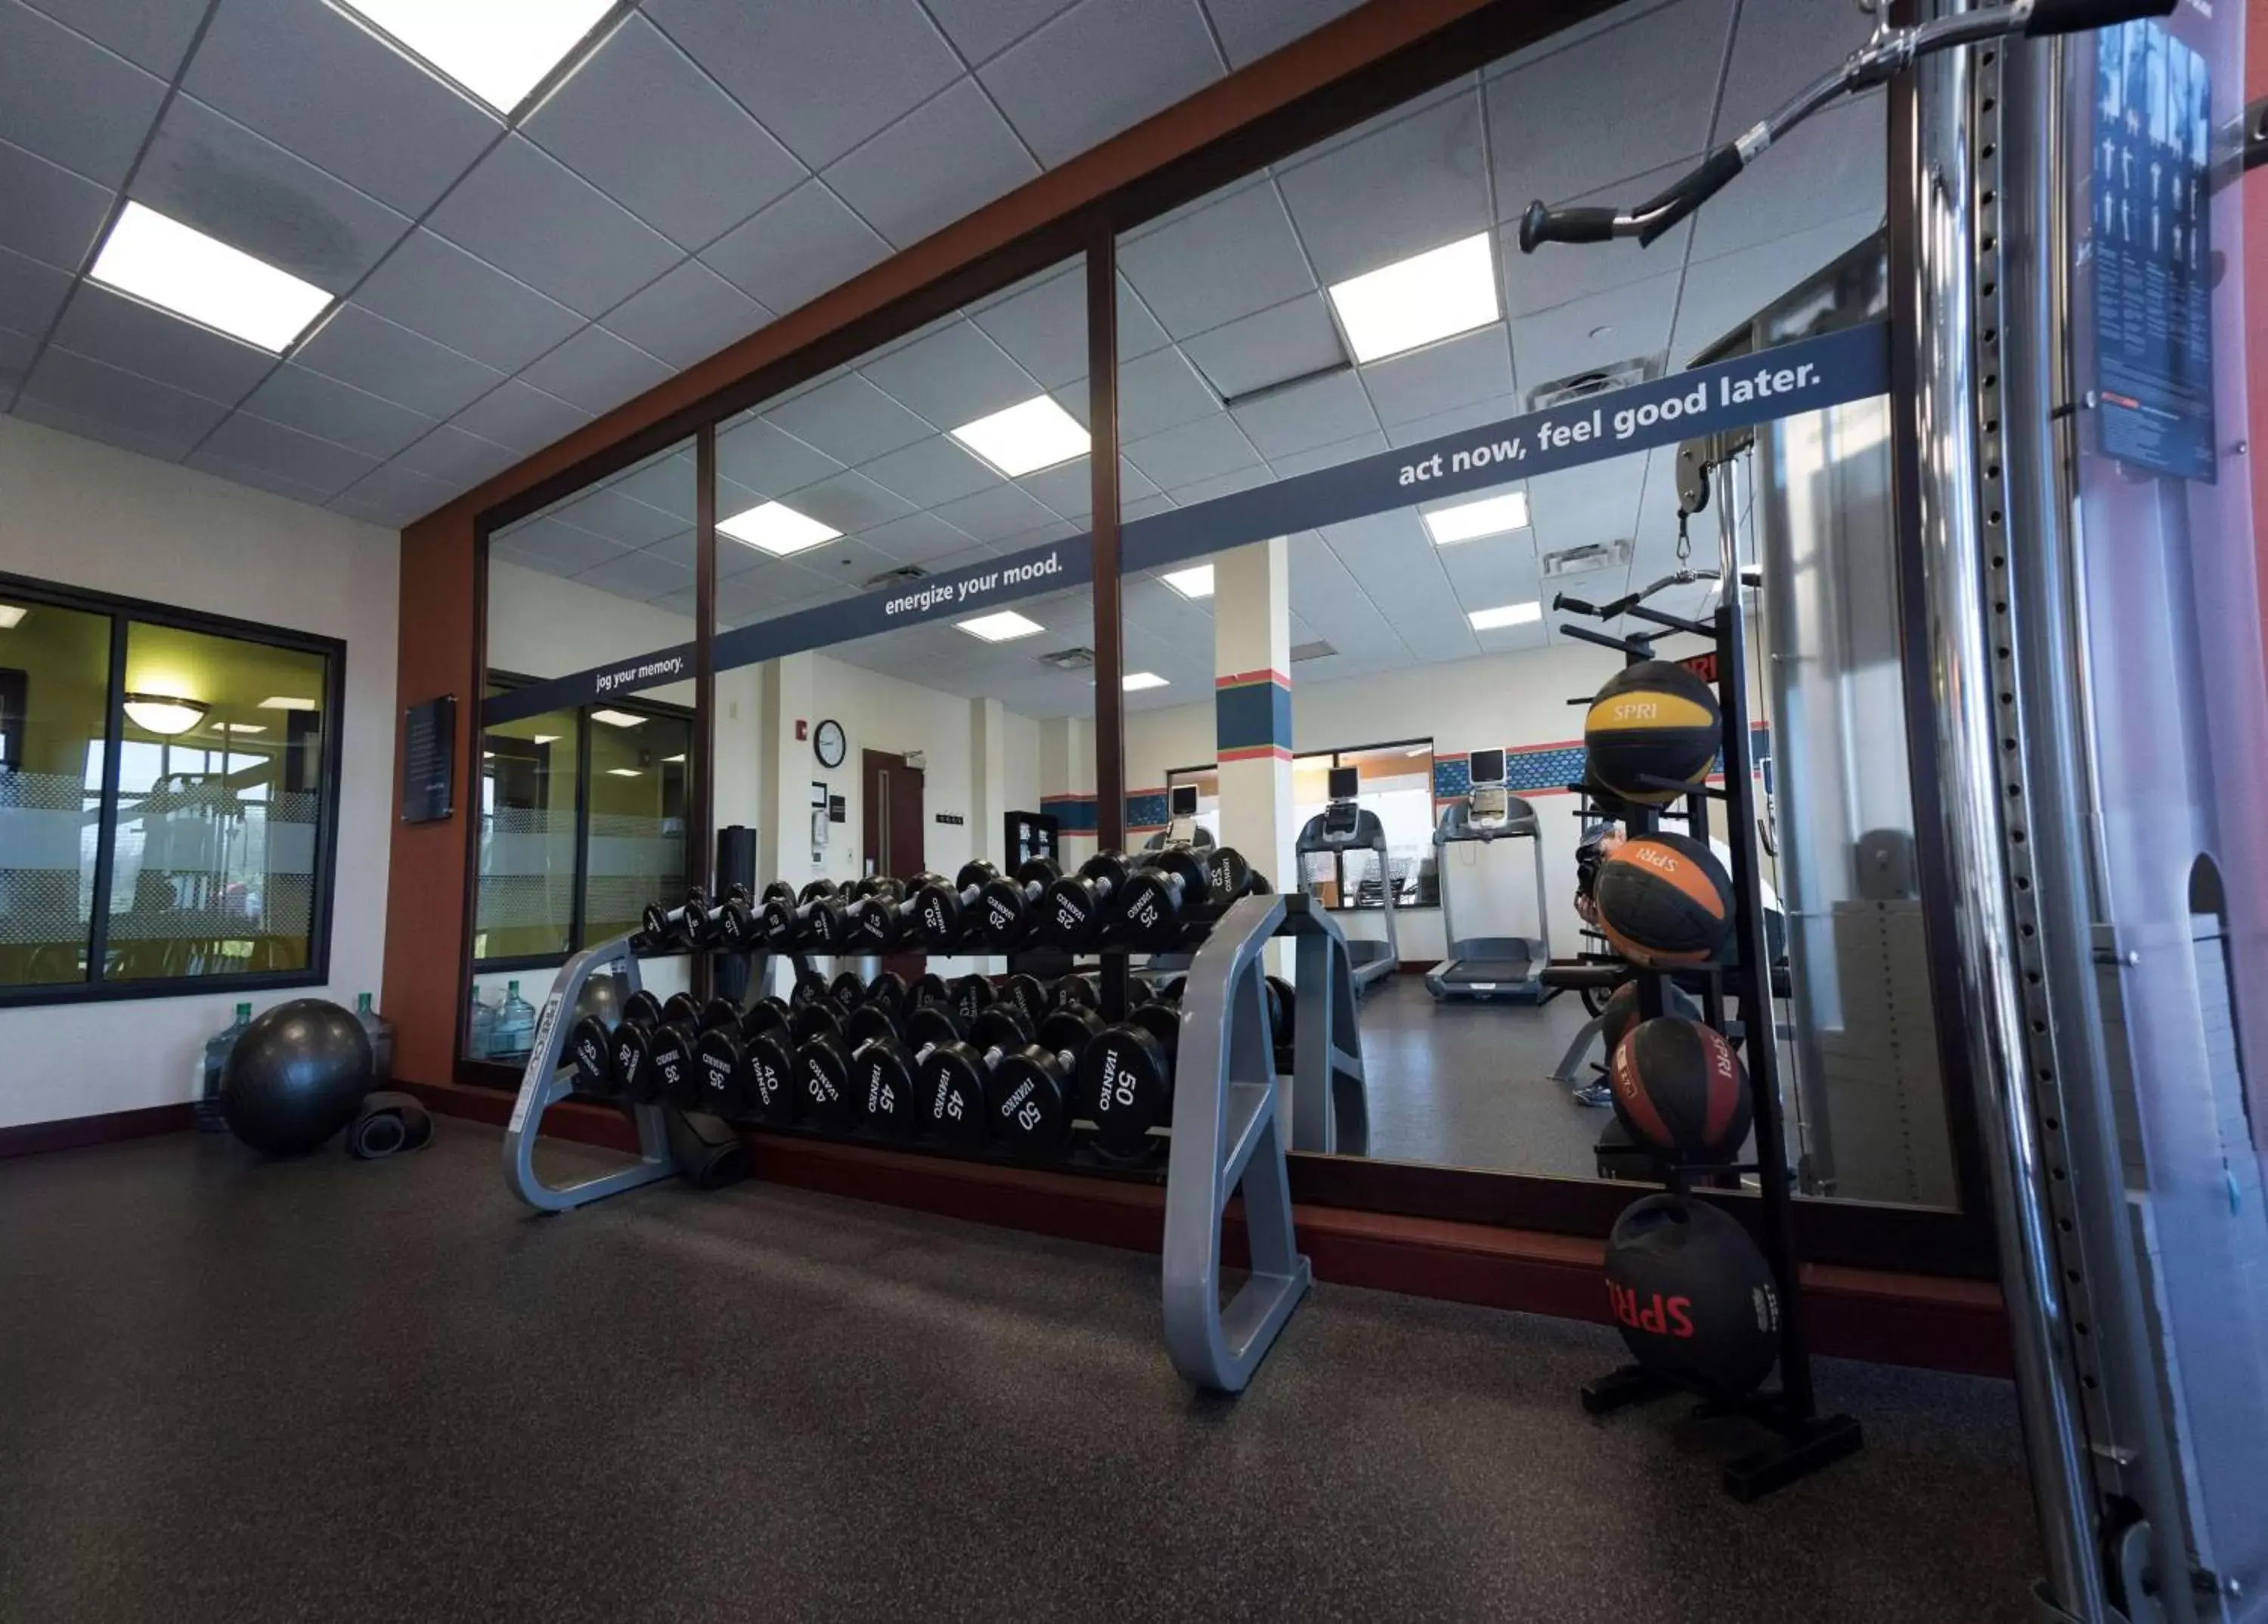 Fitness centre/facilities, Fitness Center/Facilities in Hampton Inn and Suites Woodstock, Virginia